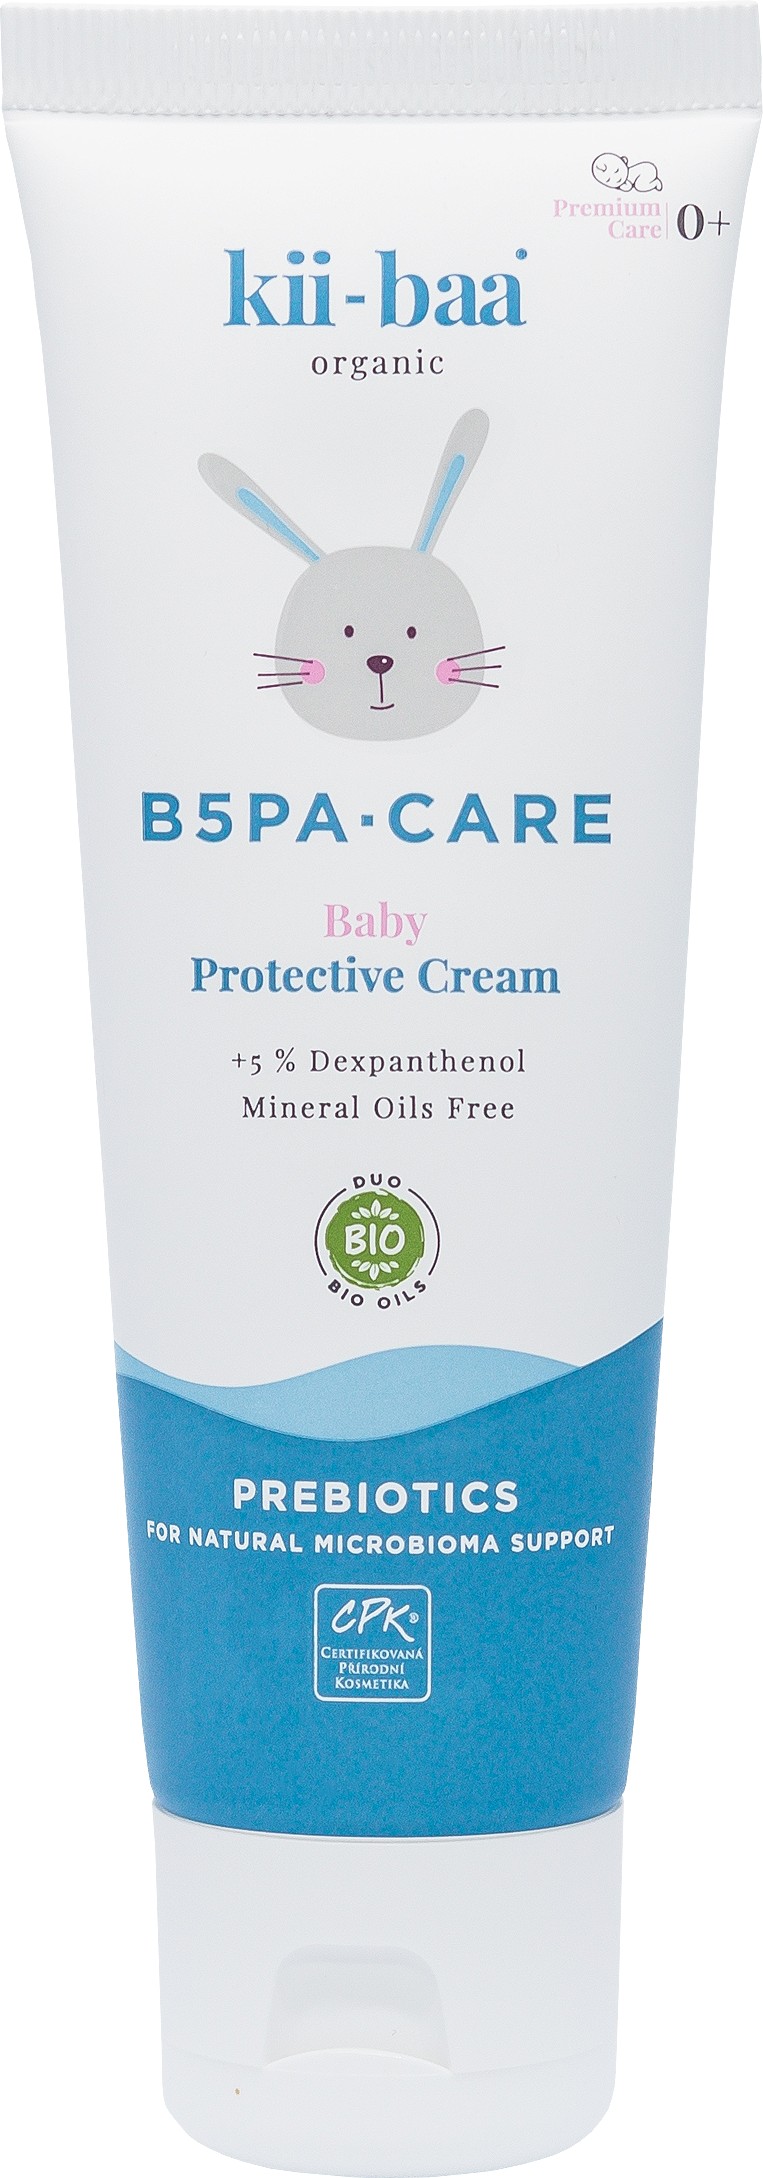 kii-baa organic Dětský ochranný krém B5PA-Care (Protective Cream) 50 ml